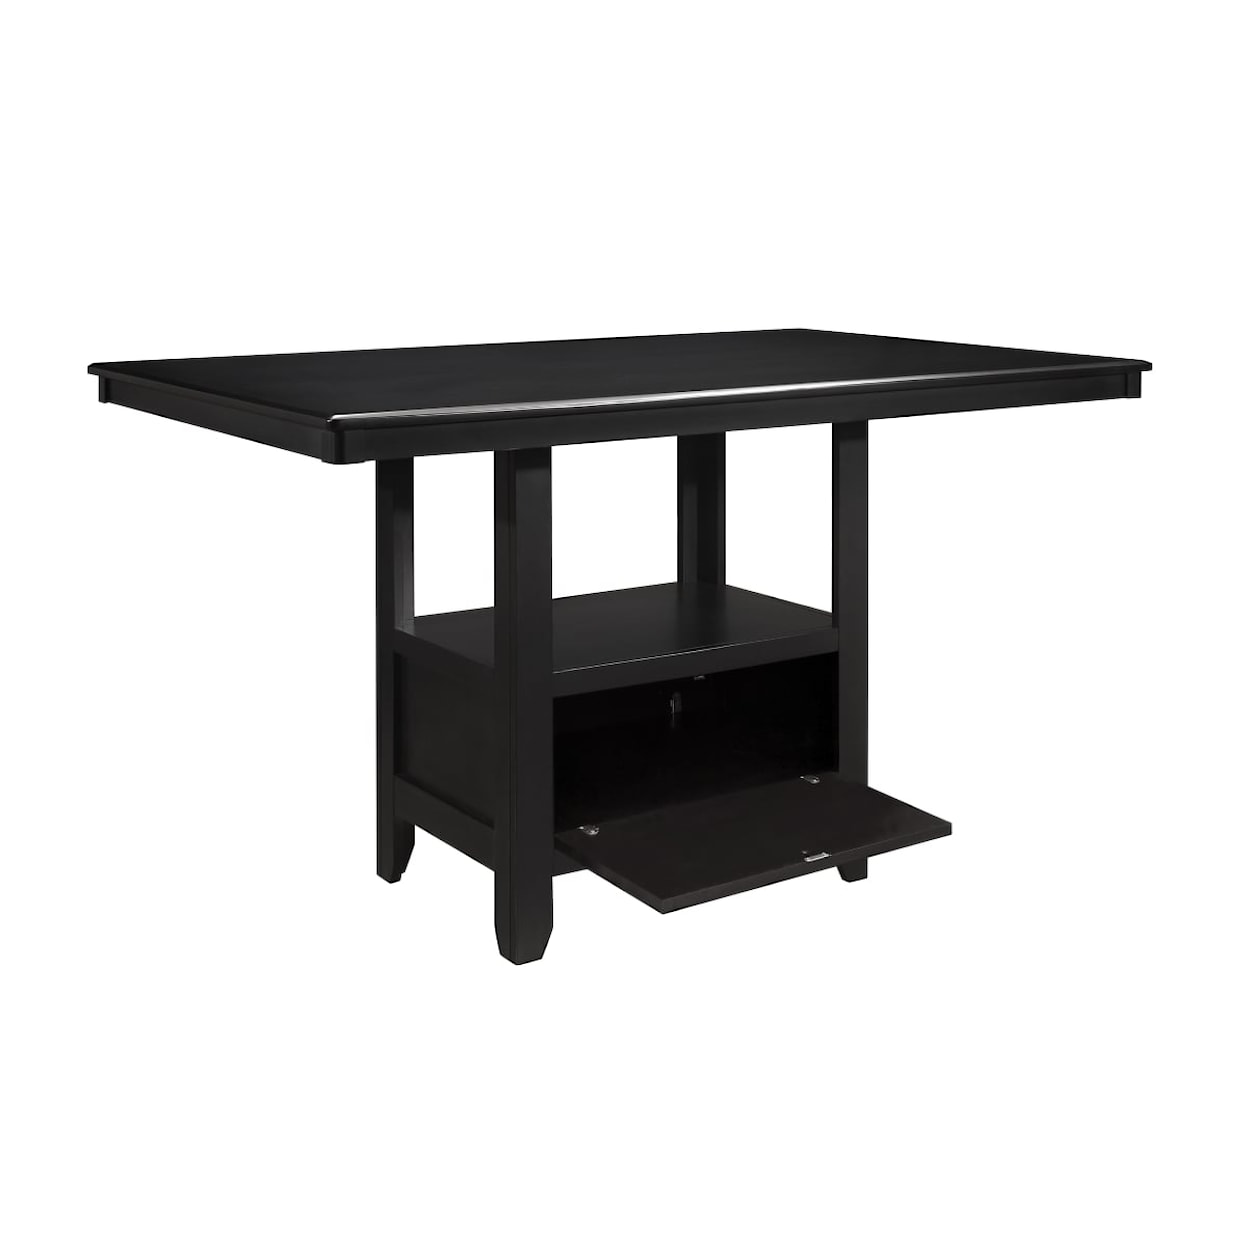 Homelegance Raven Counter Height Table